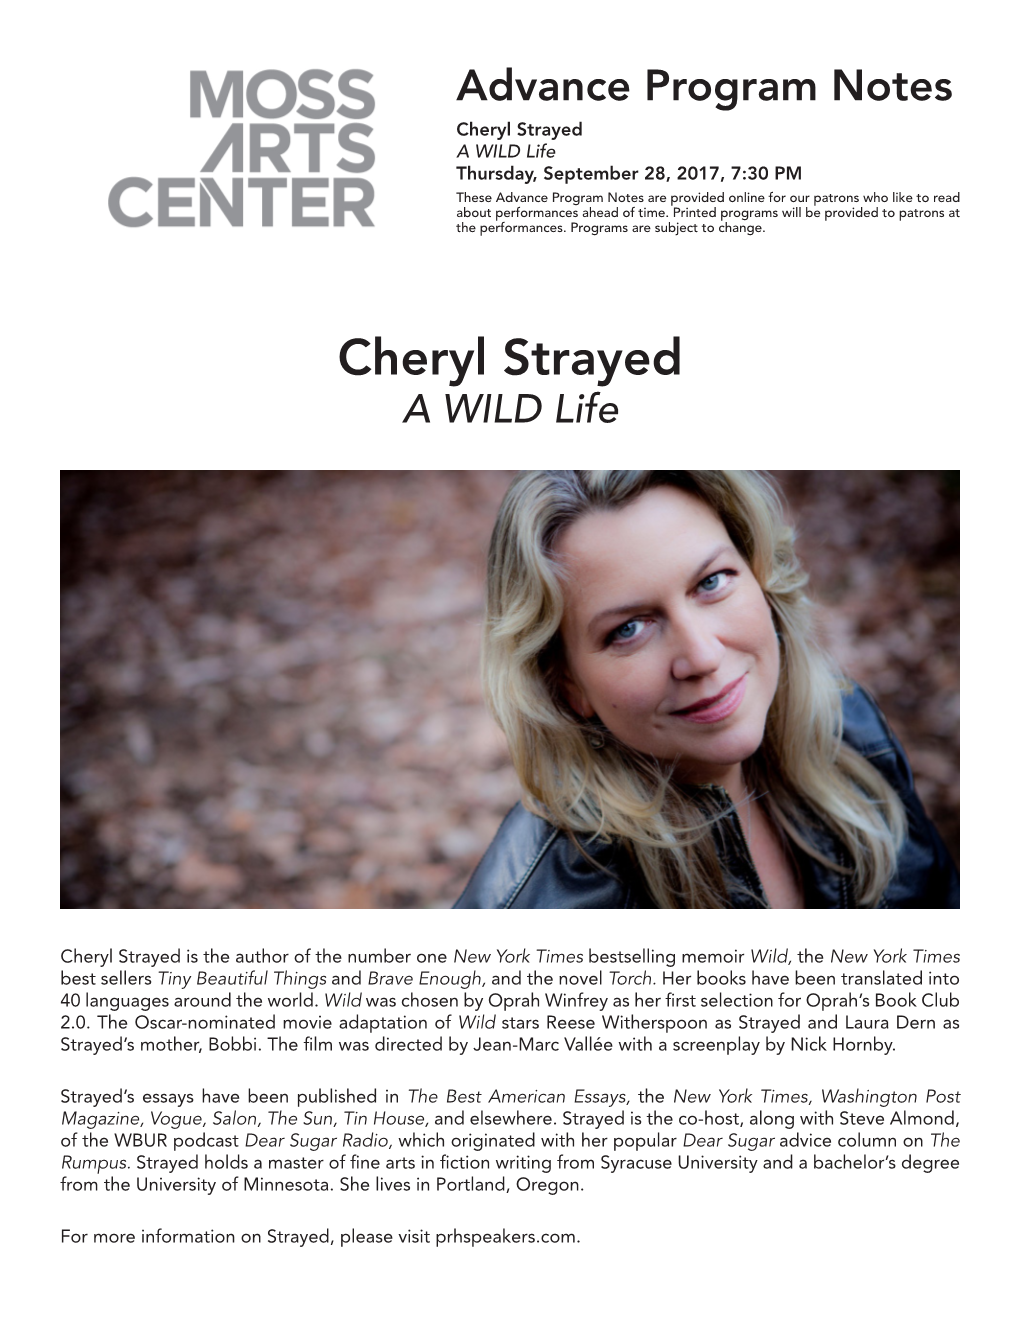 Cheryl Strayed